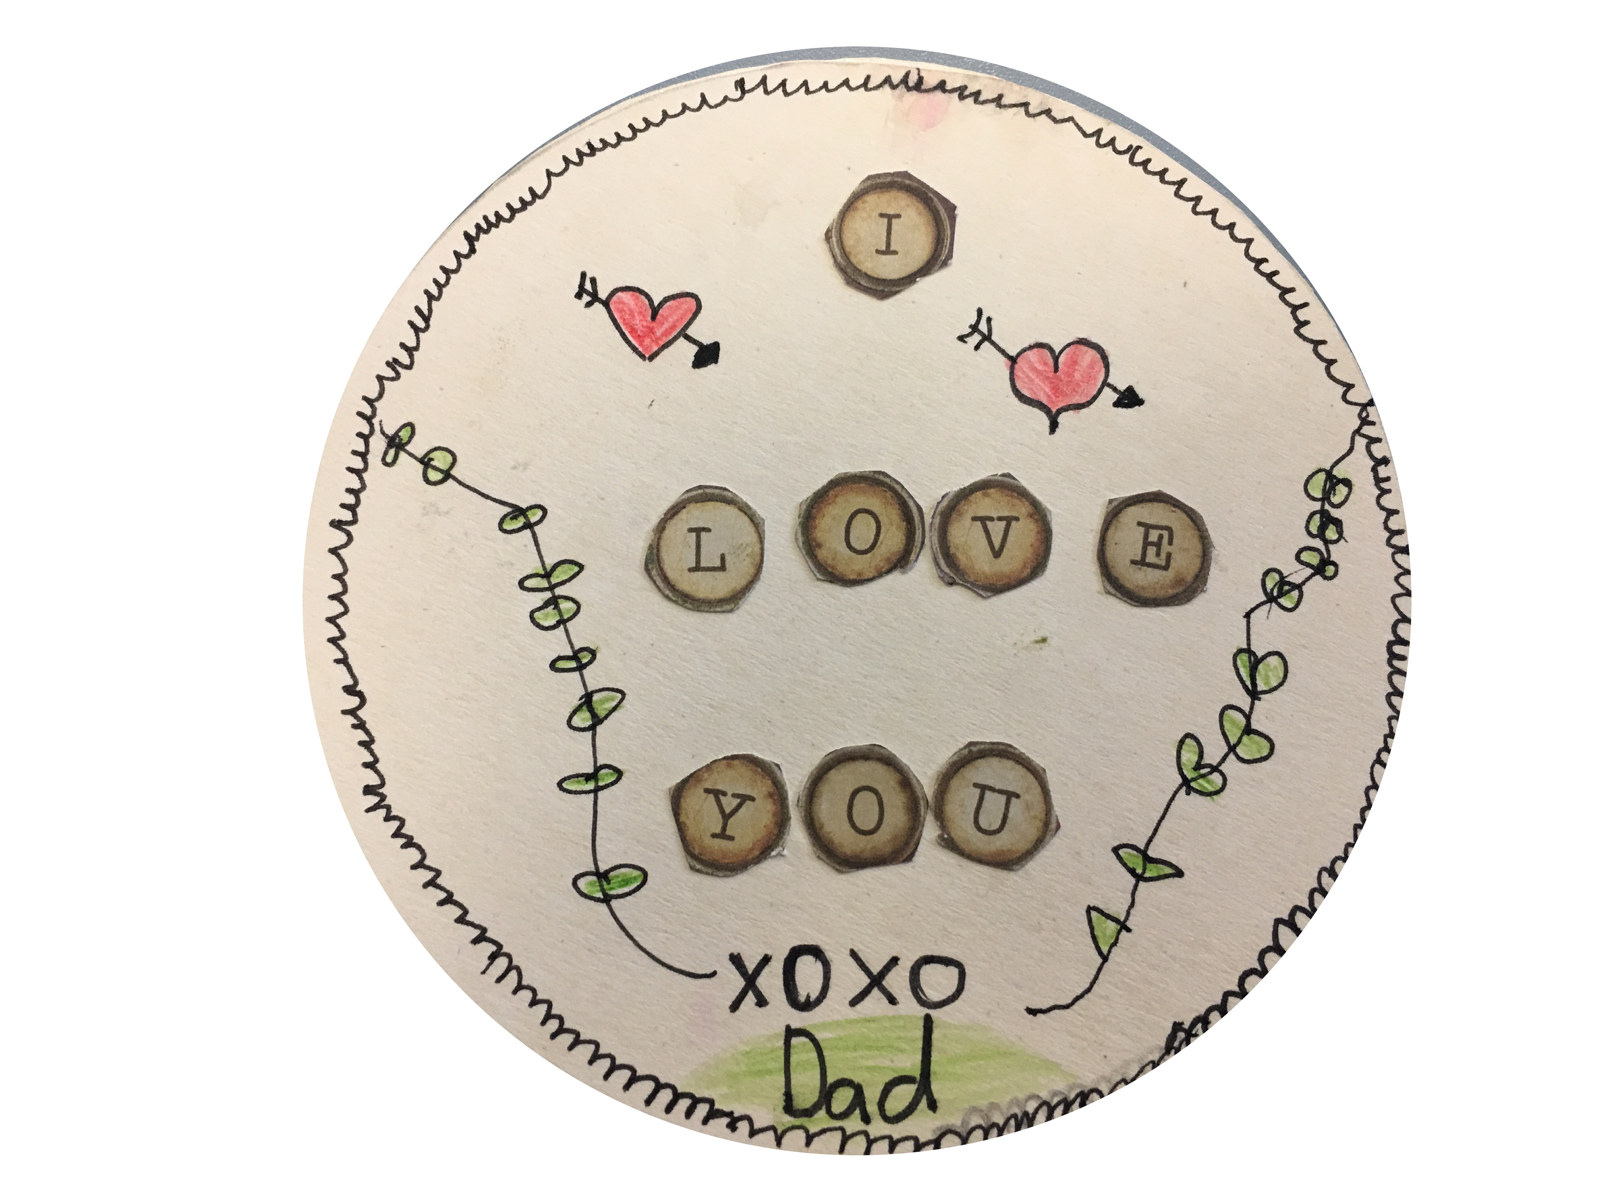 Artwork on paper or card depicting student interpretation of coin-shaped love token.